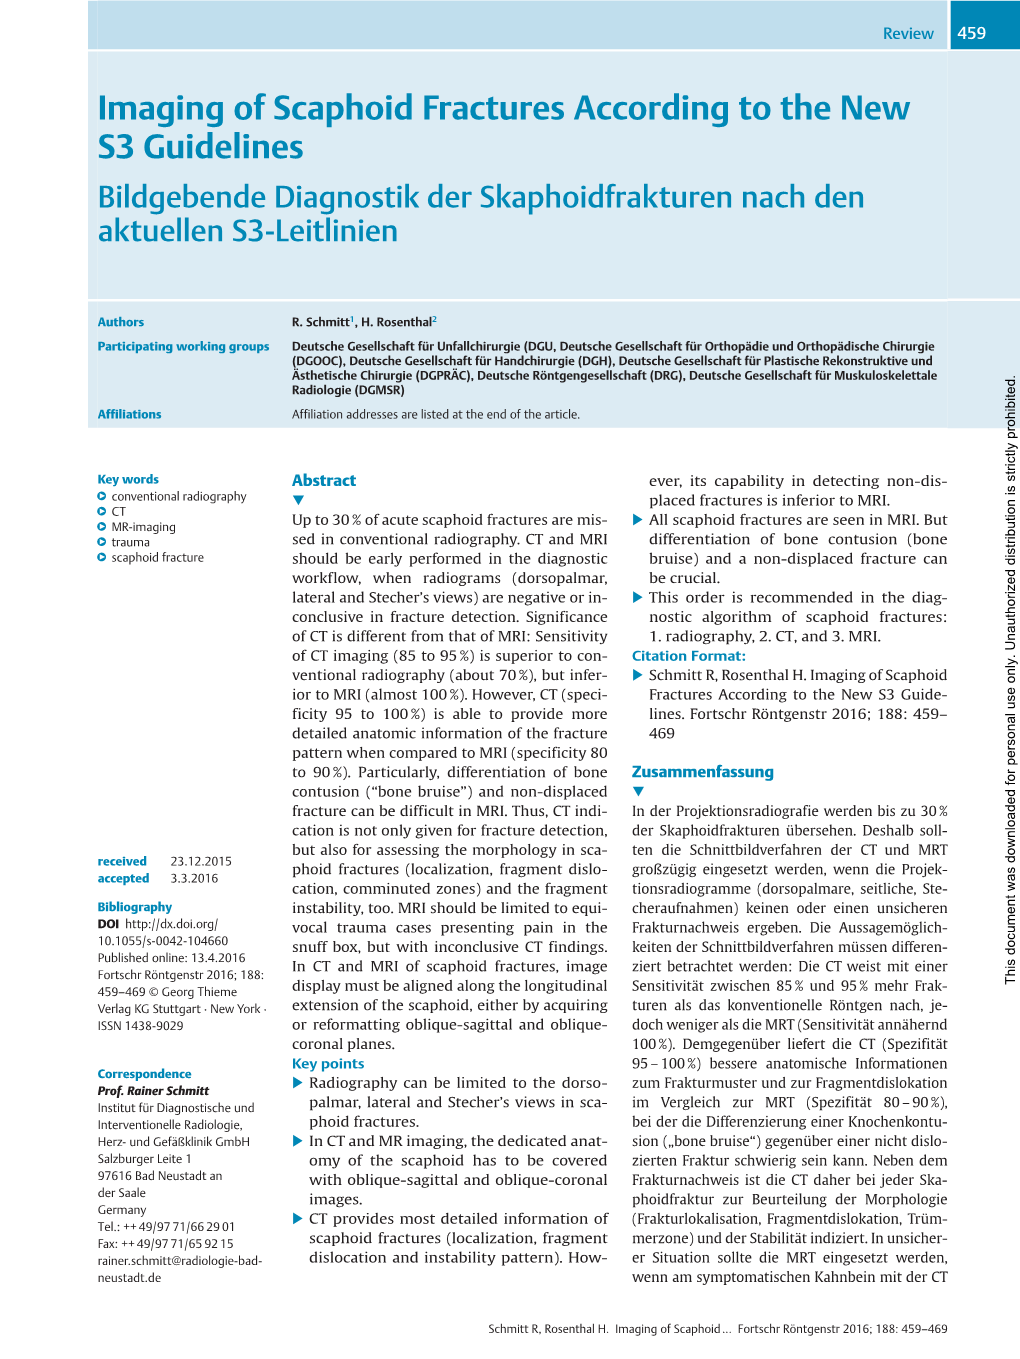 Imaging of Scaphoid Fractures According to the New S3 Guidelines Bildgebende Diagnostik Der Skaphoidfrakturen Nach Den Aktuellen S3-Leitlinien